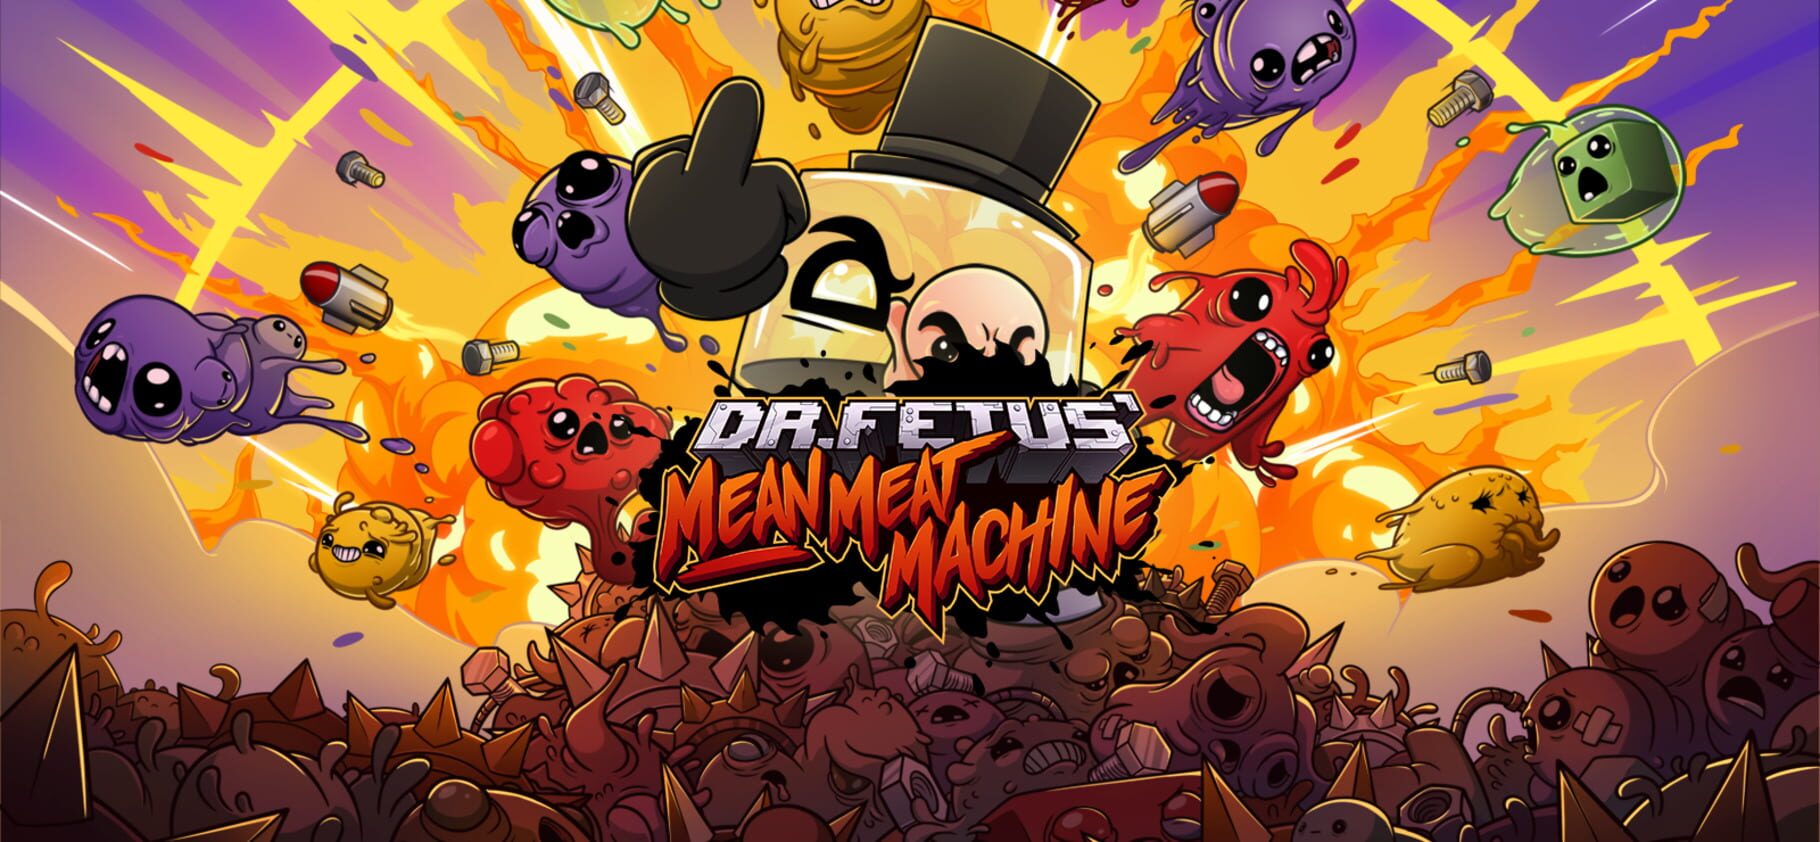 Dr. Fetus' Mean Meat Machine artwork